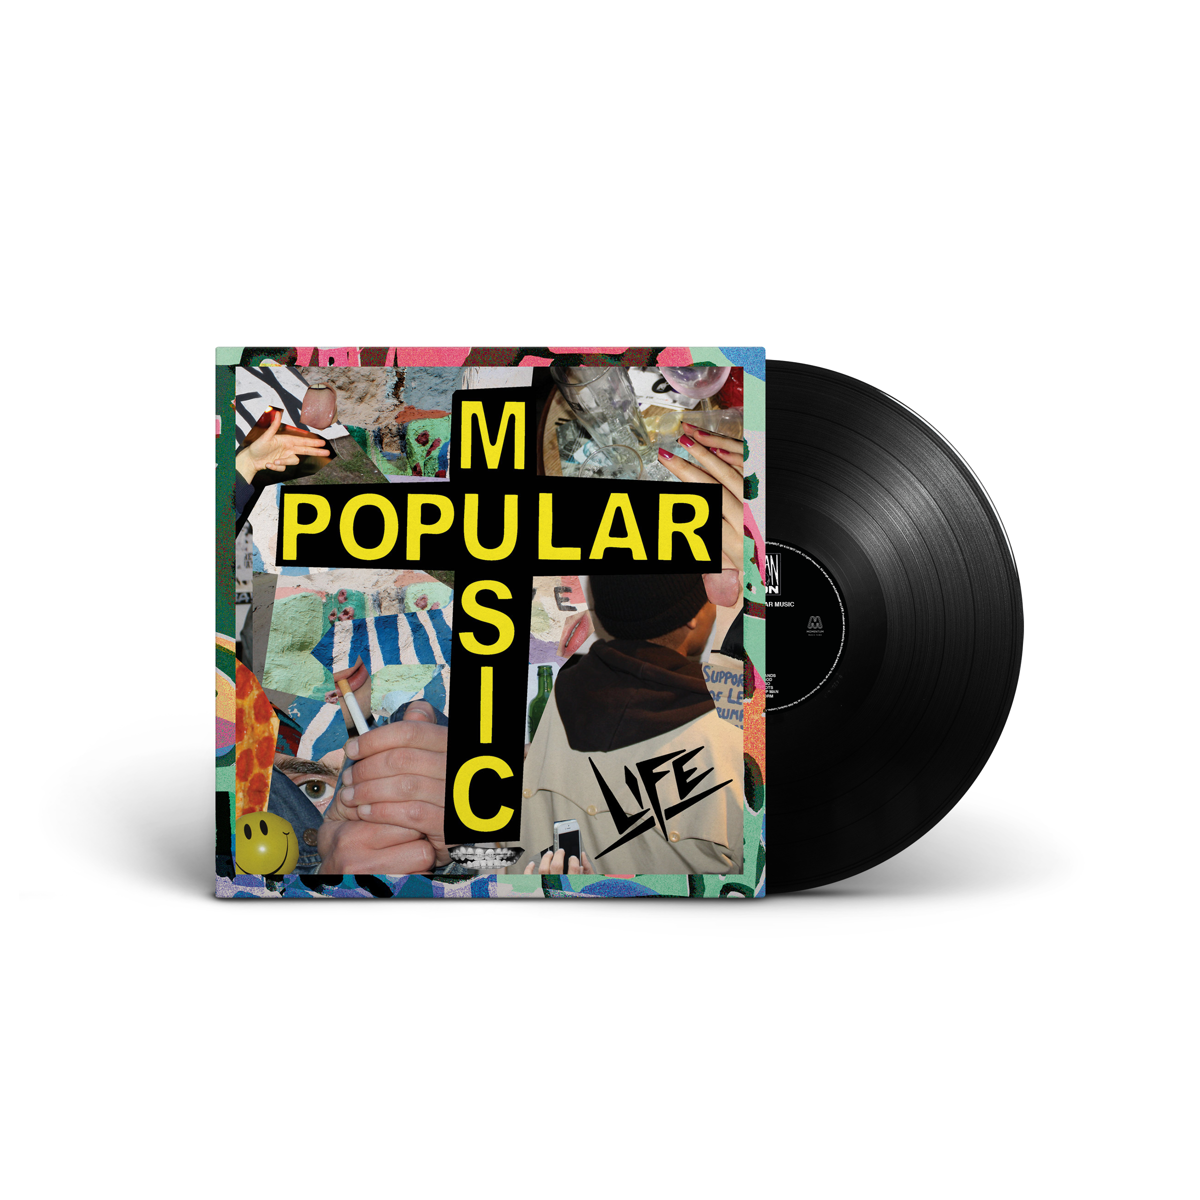 Popular Music - Vinyl LP - LIFE